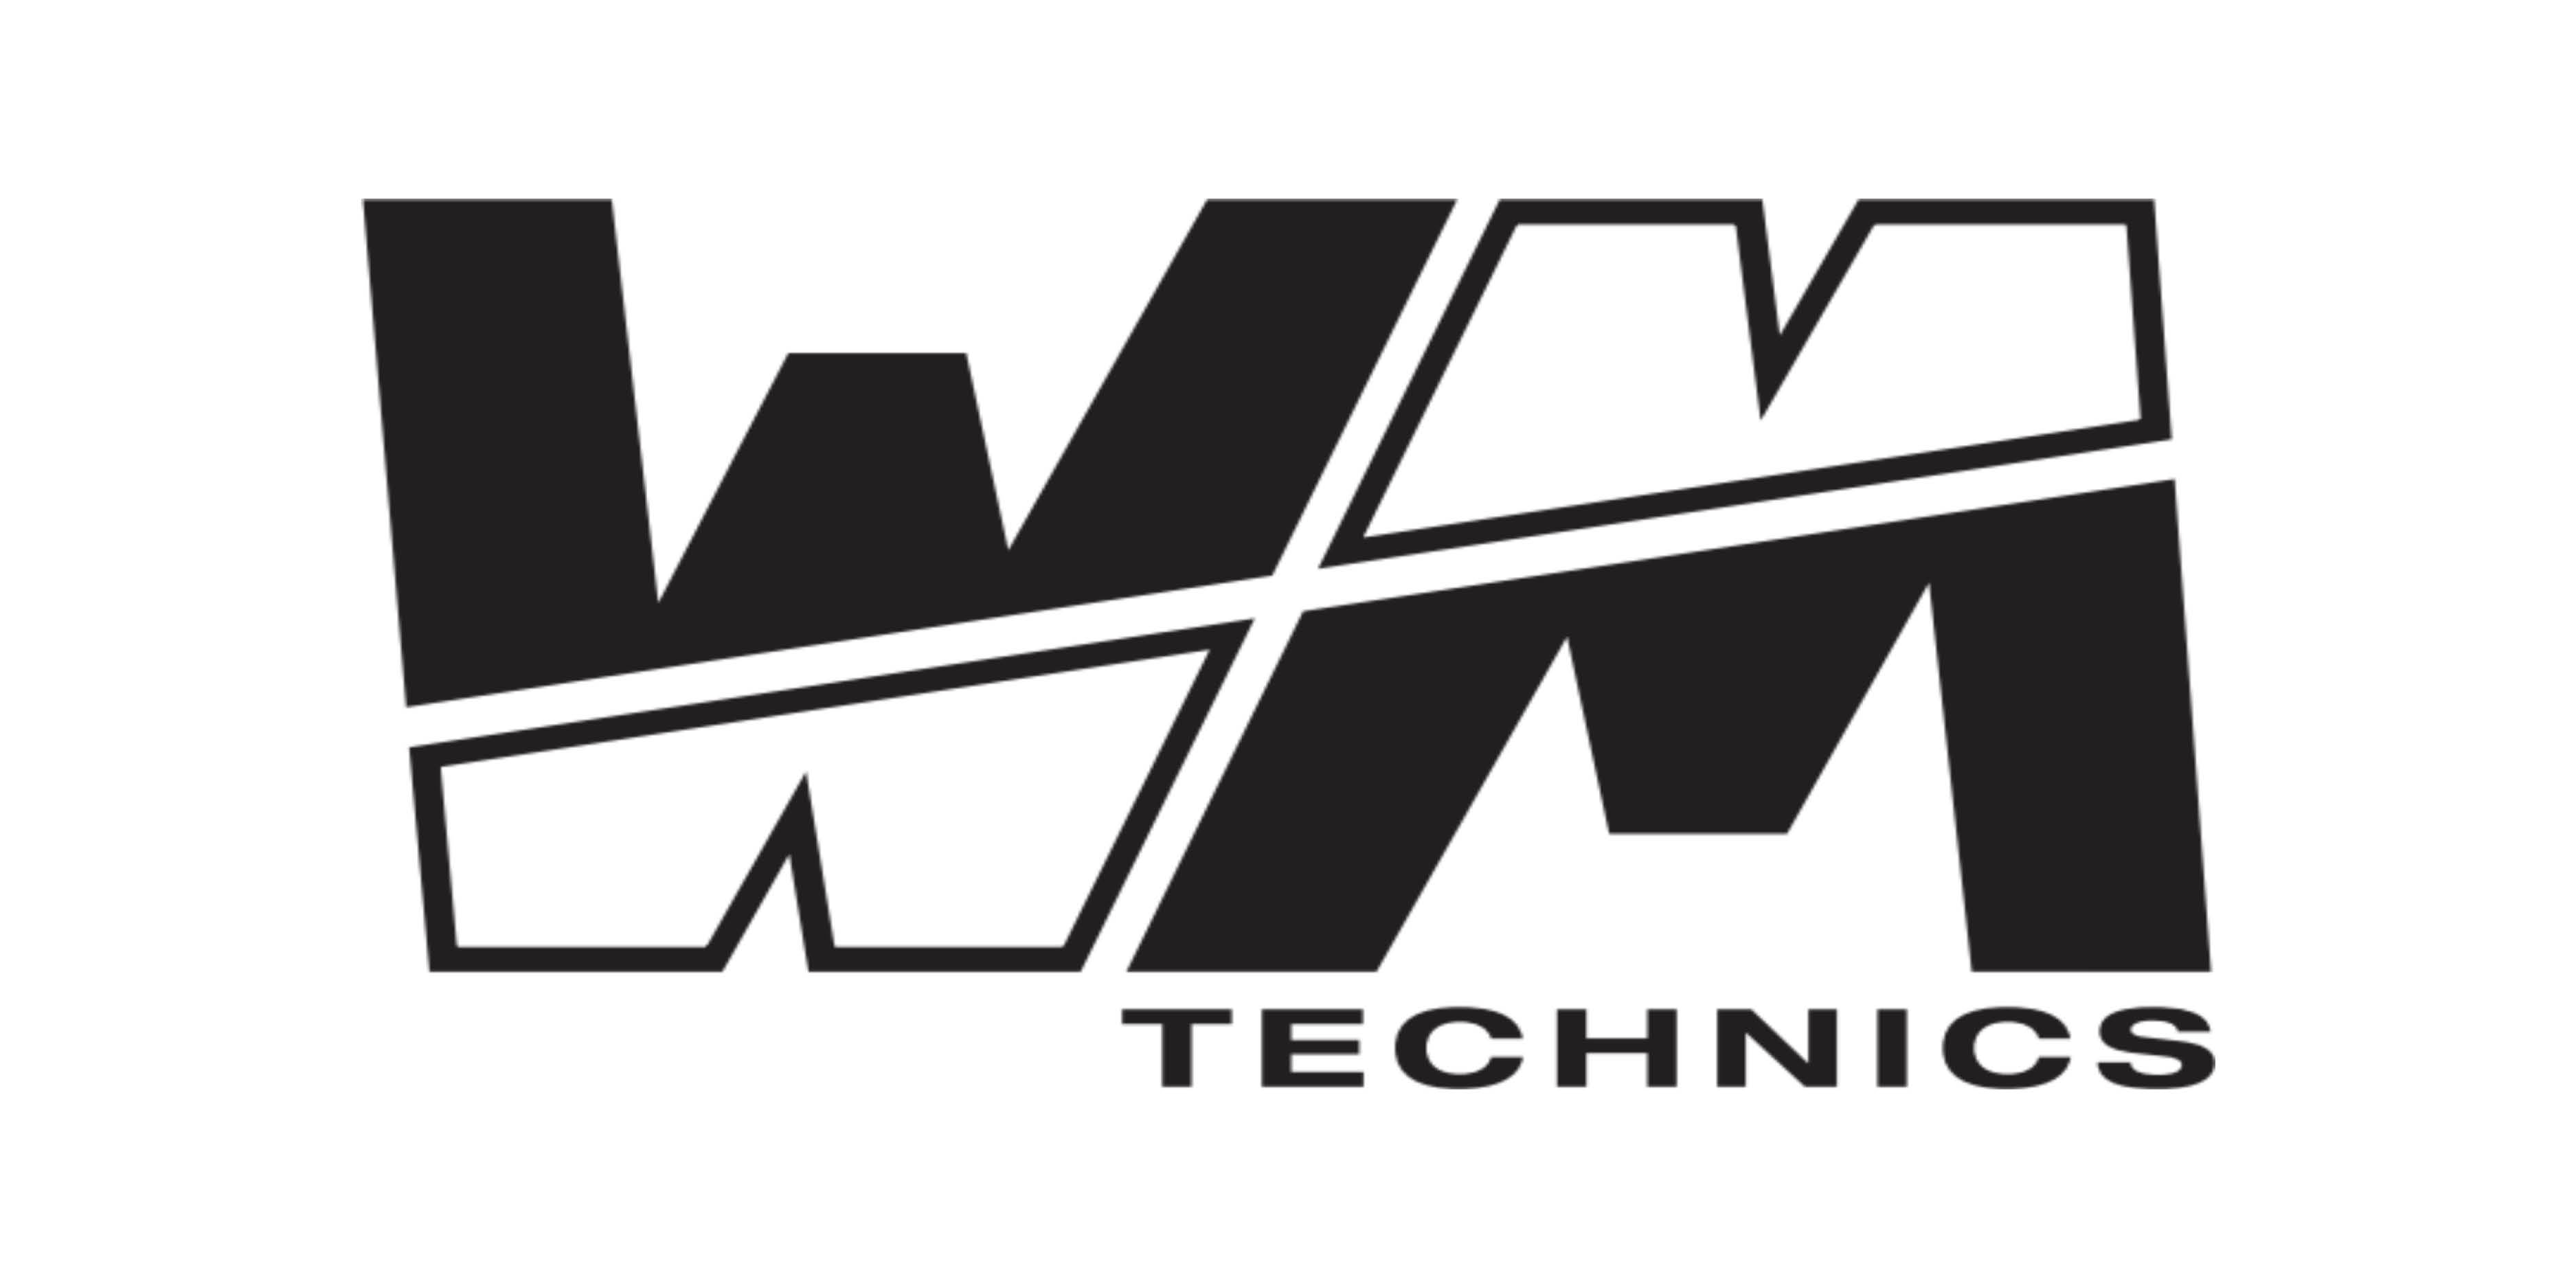 WM technics GmbH